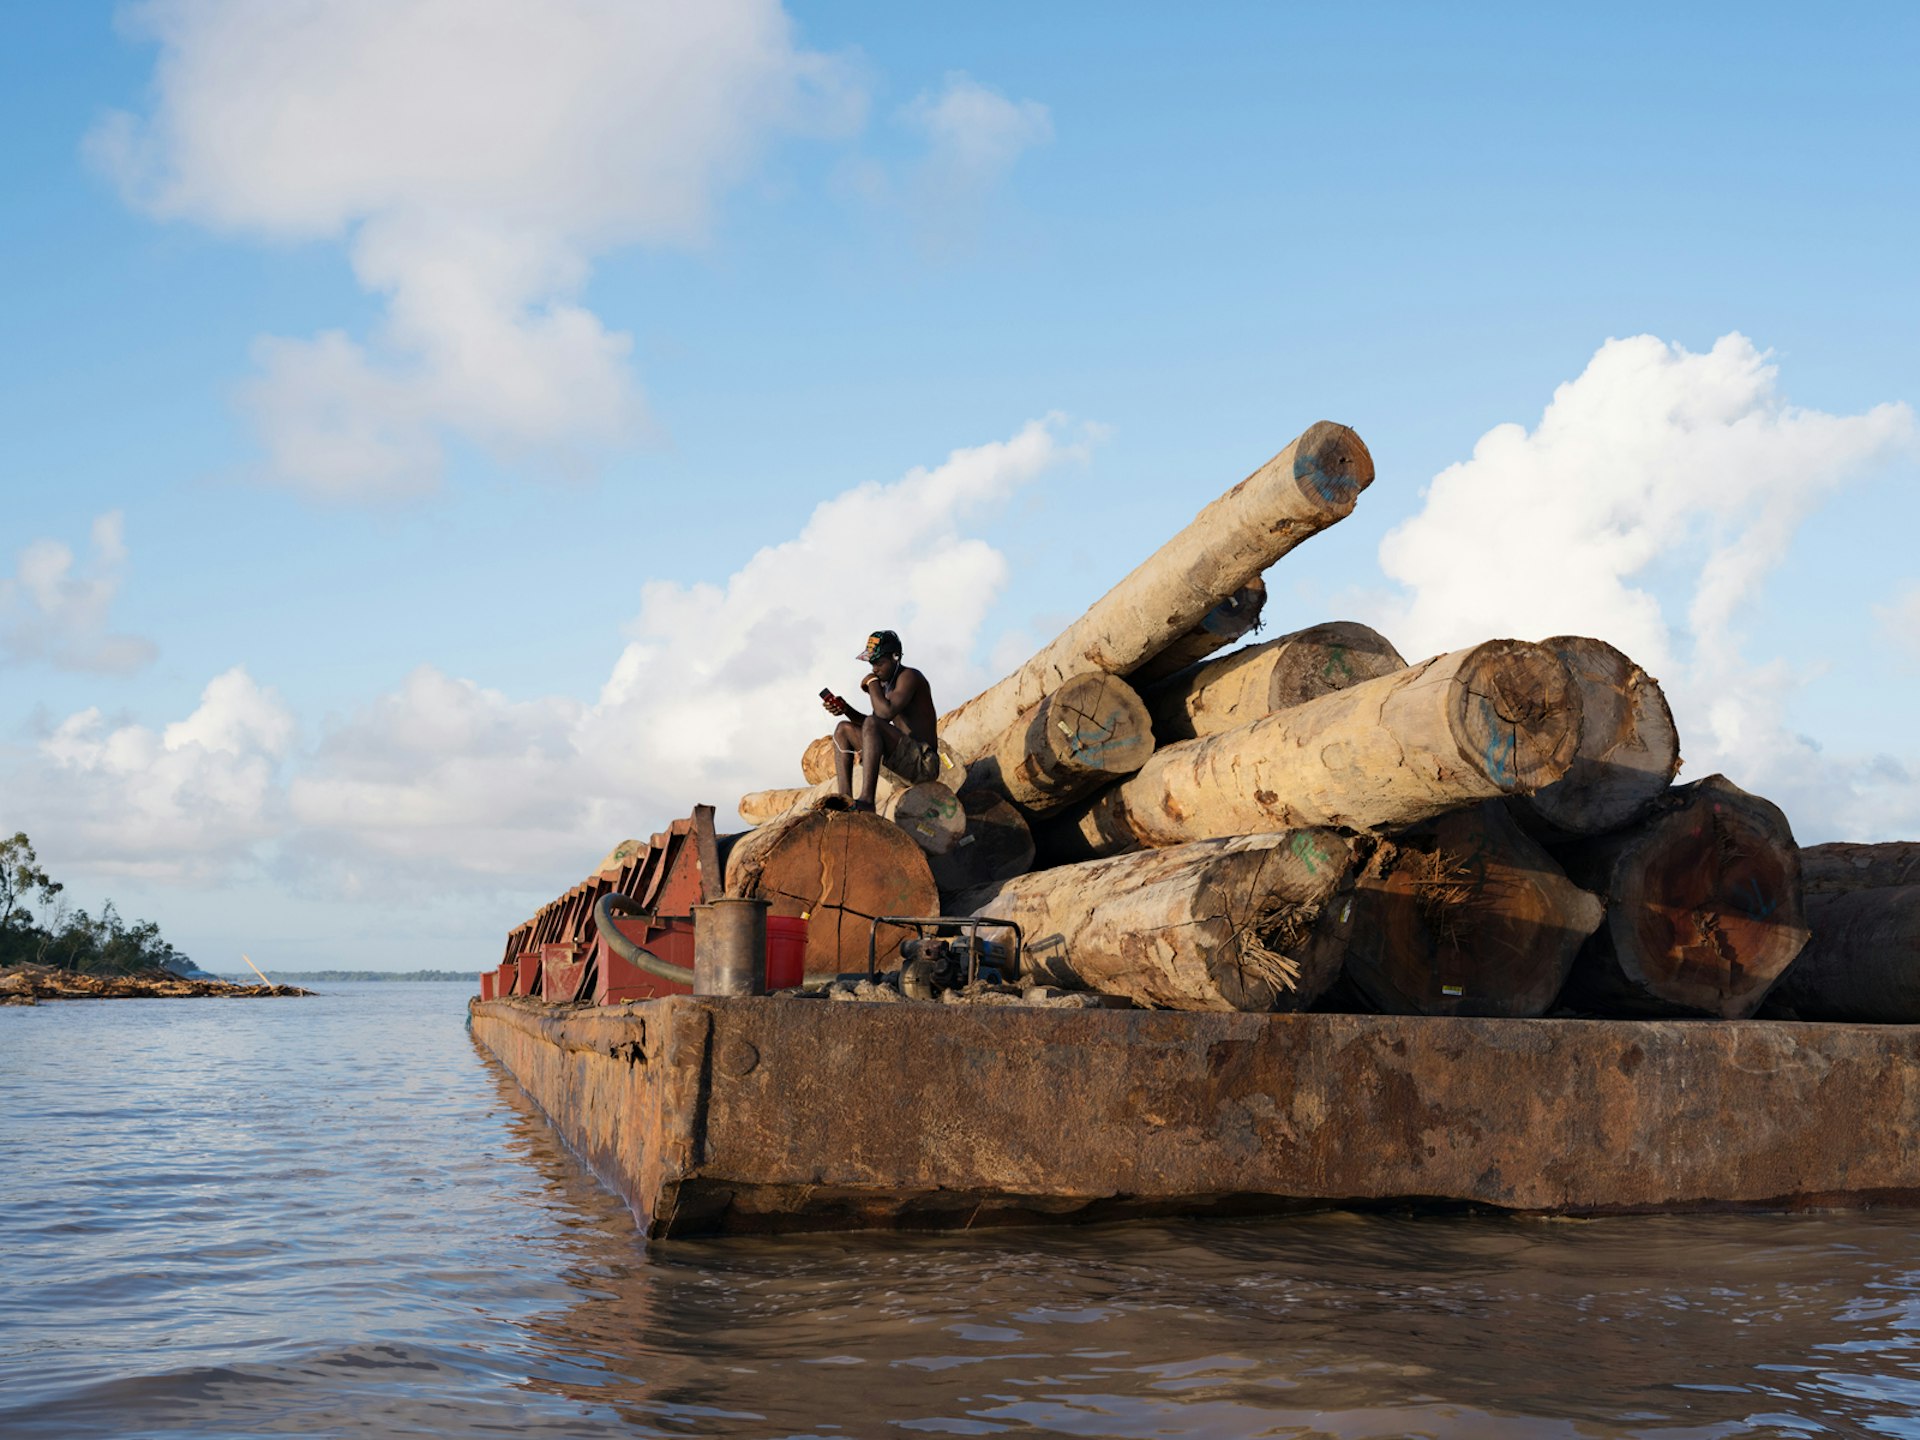 Kurt guarding logs for export to China, Essequibo River, Guyana. © Lucas Foglia, courtesy of Michael Hoppen Gallery, London.